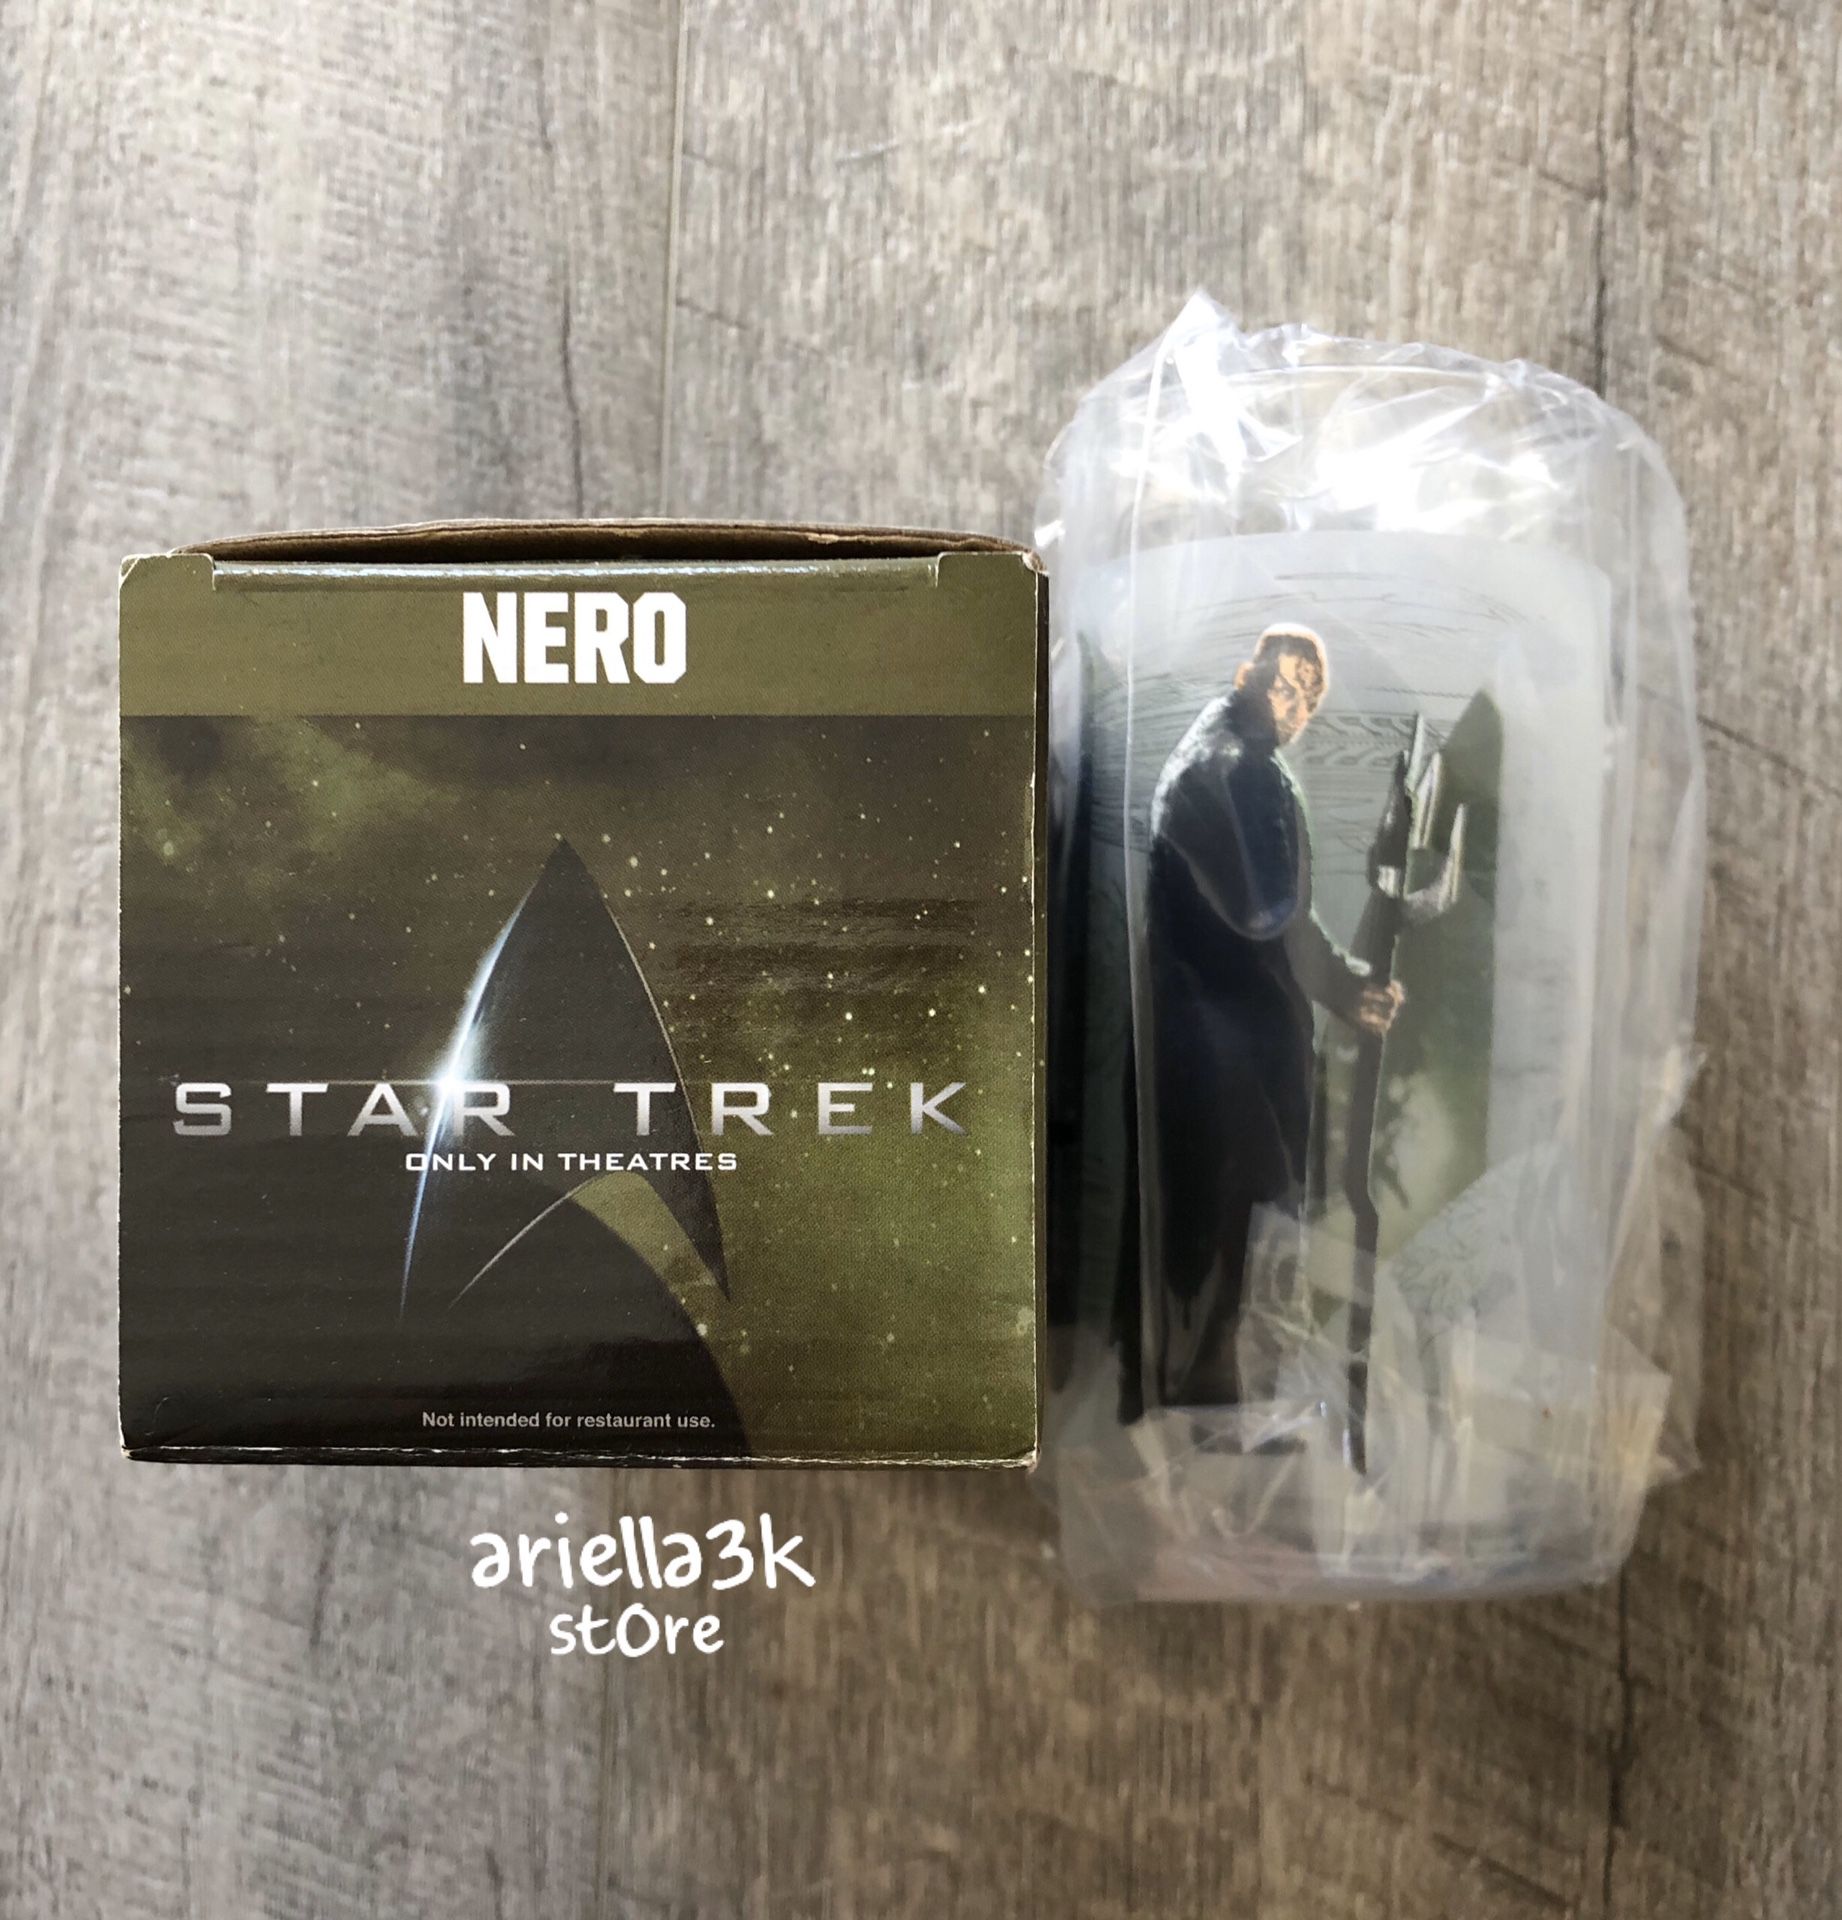 Star Trek “Nero" Collectible Glass